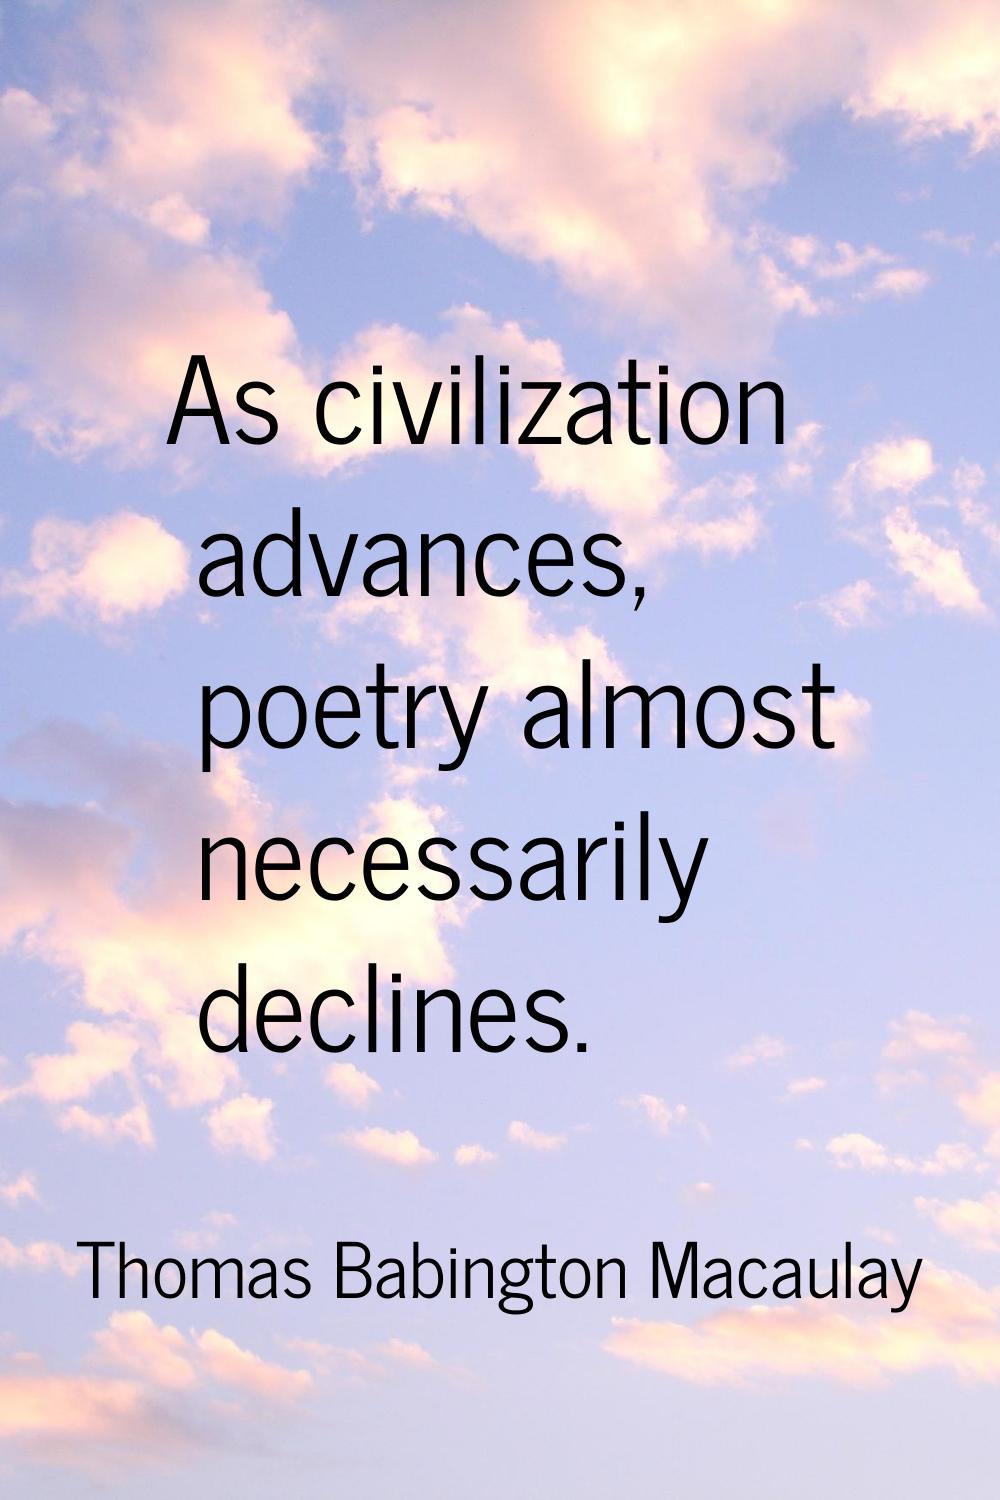 As civilization advances, poetry almost necessarily declines.